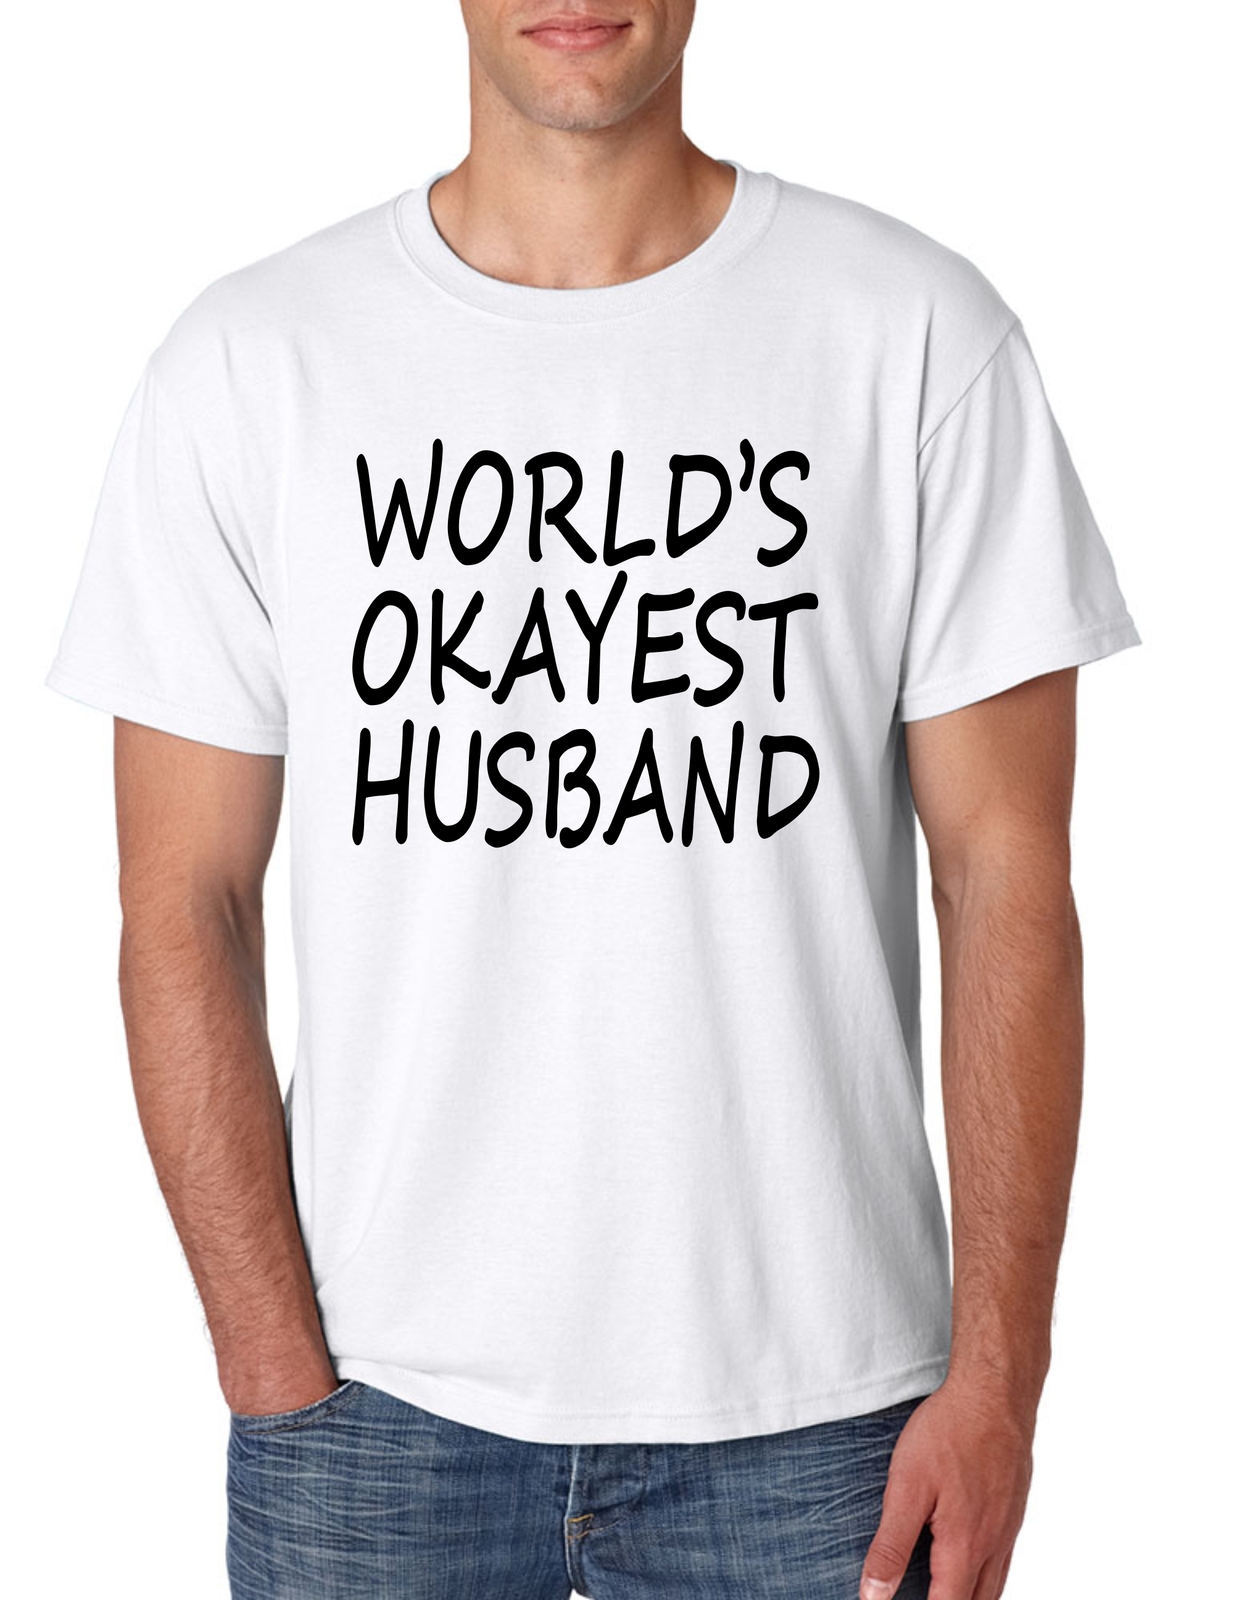 Men's T Shirt World's Okayest Husband Valentines Day Top - $10.94